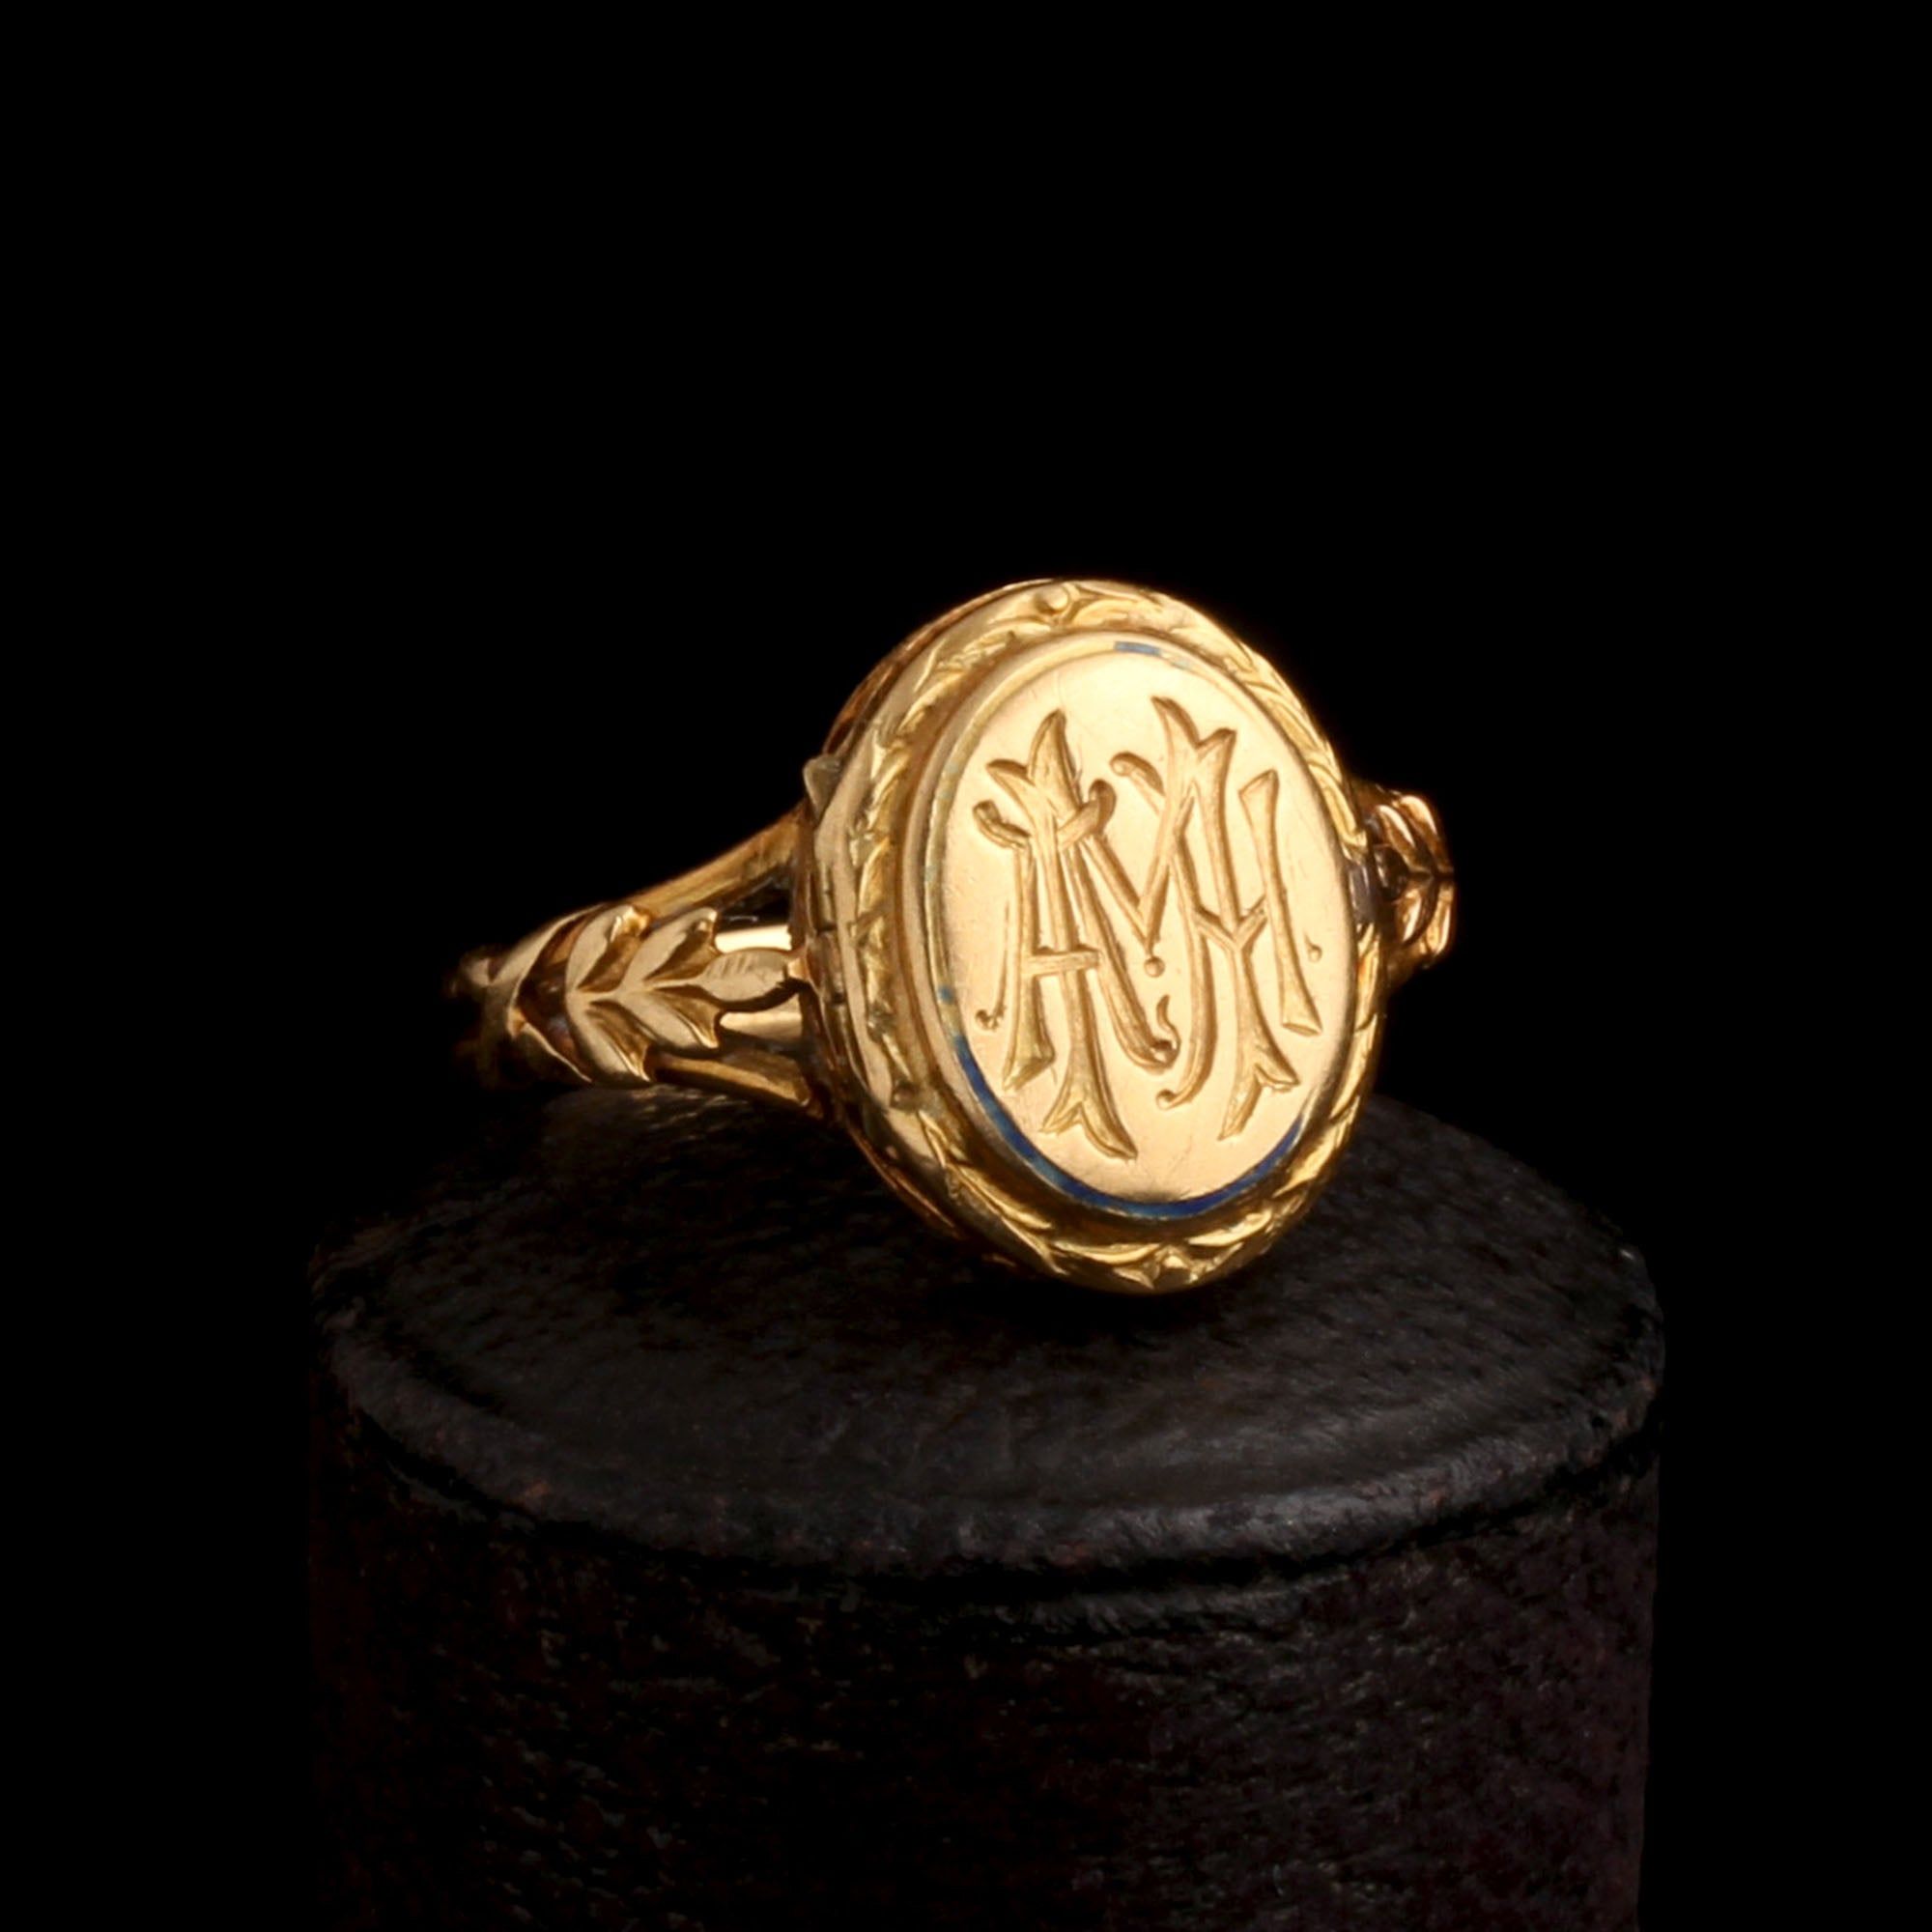 19th Century French "AHM" Monogram Locket Ring.